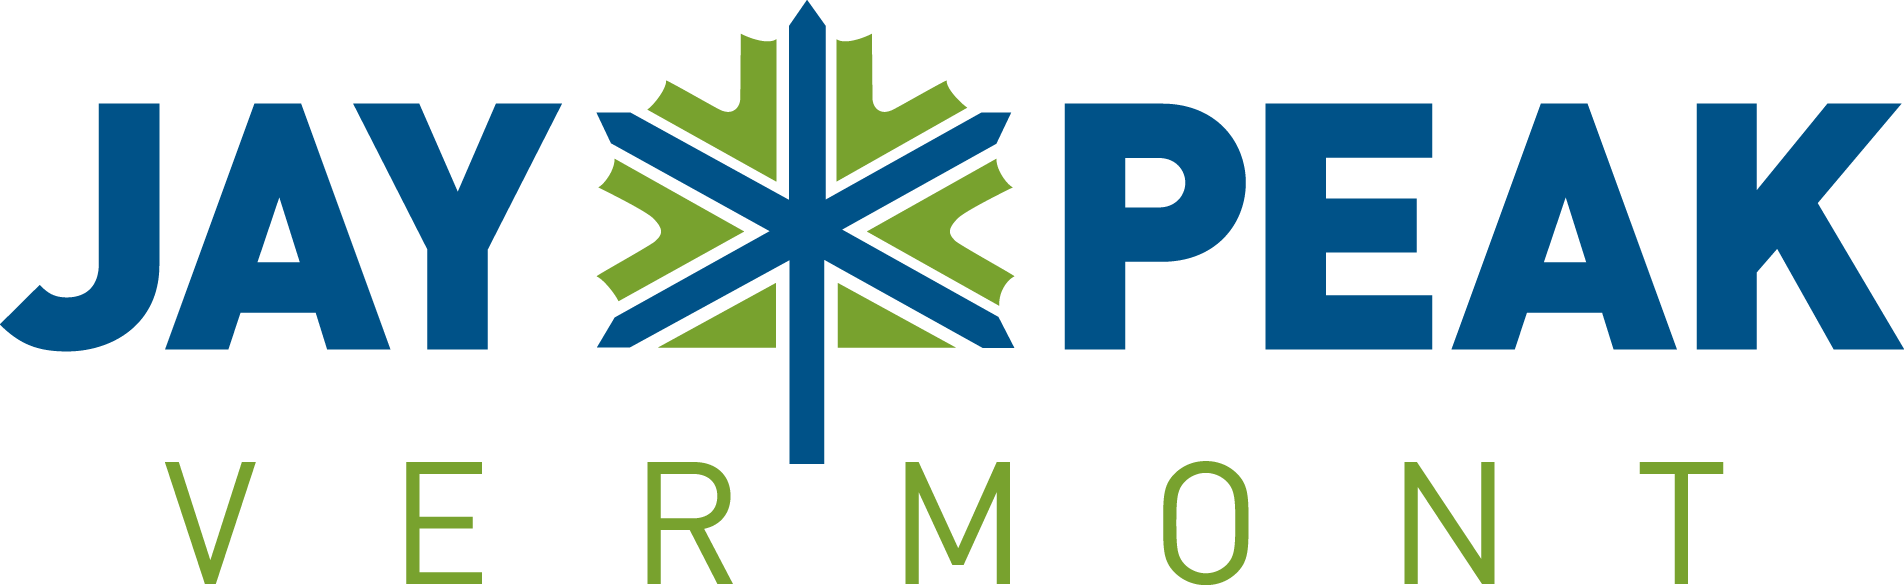 jay peak vermont logo